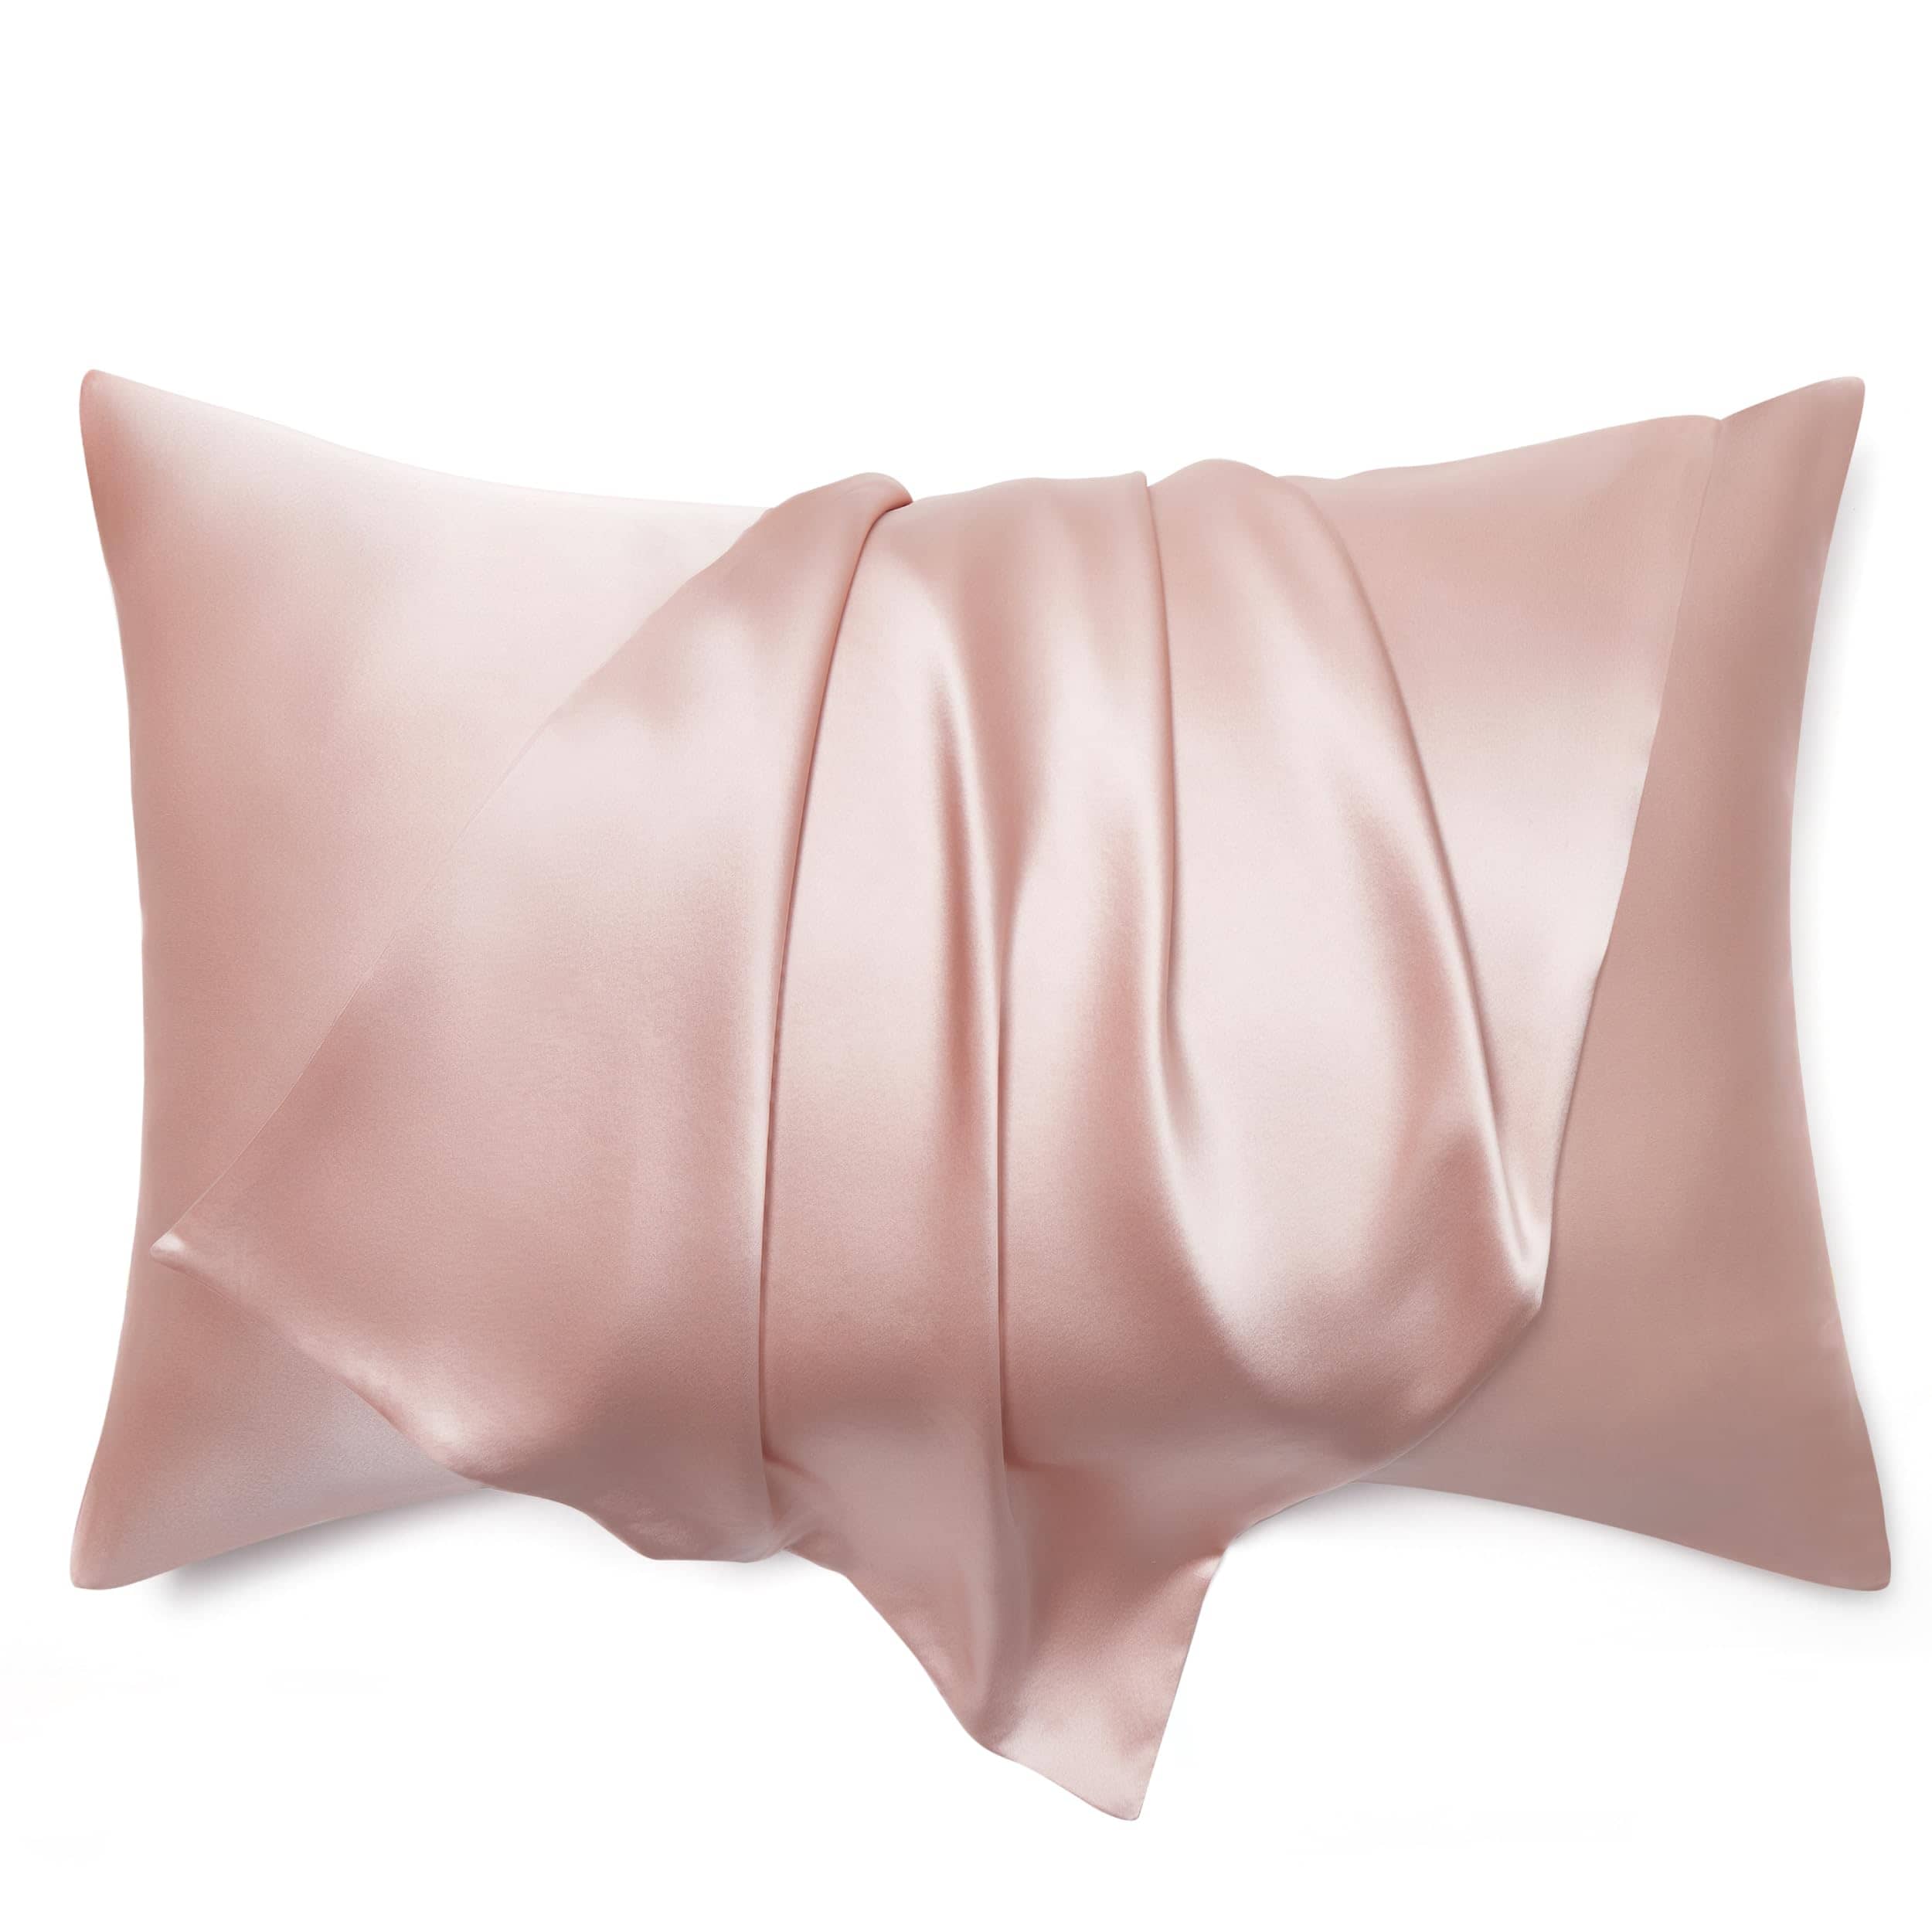 Mulberry Silk-Lyocell Pillowcases